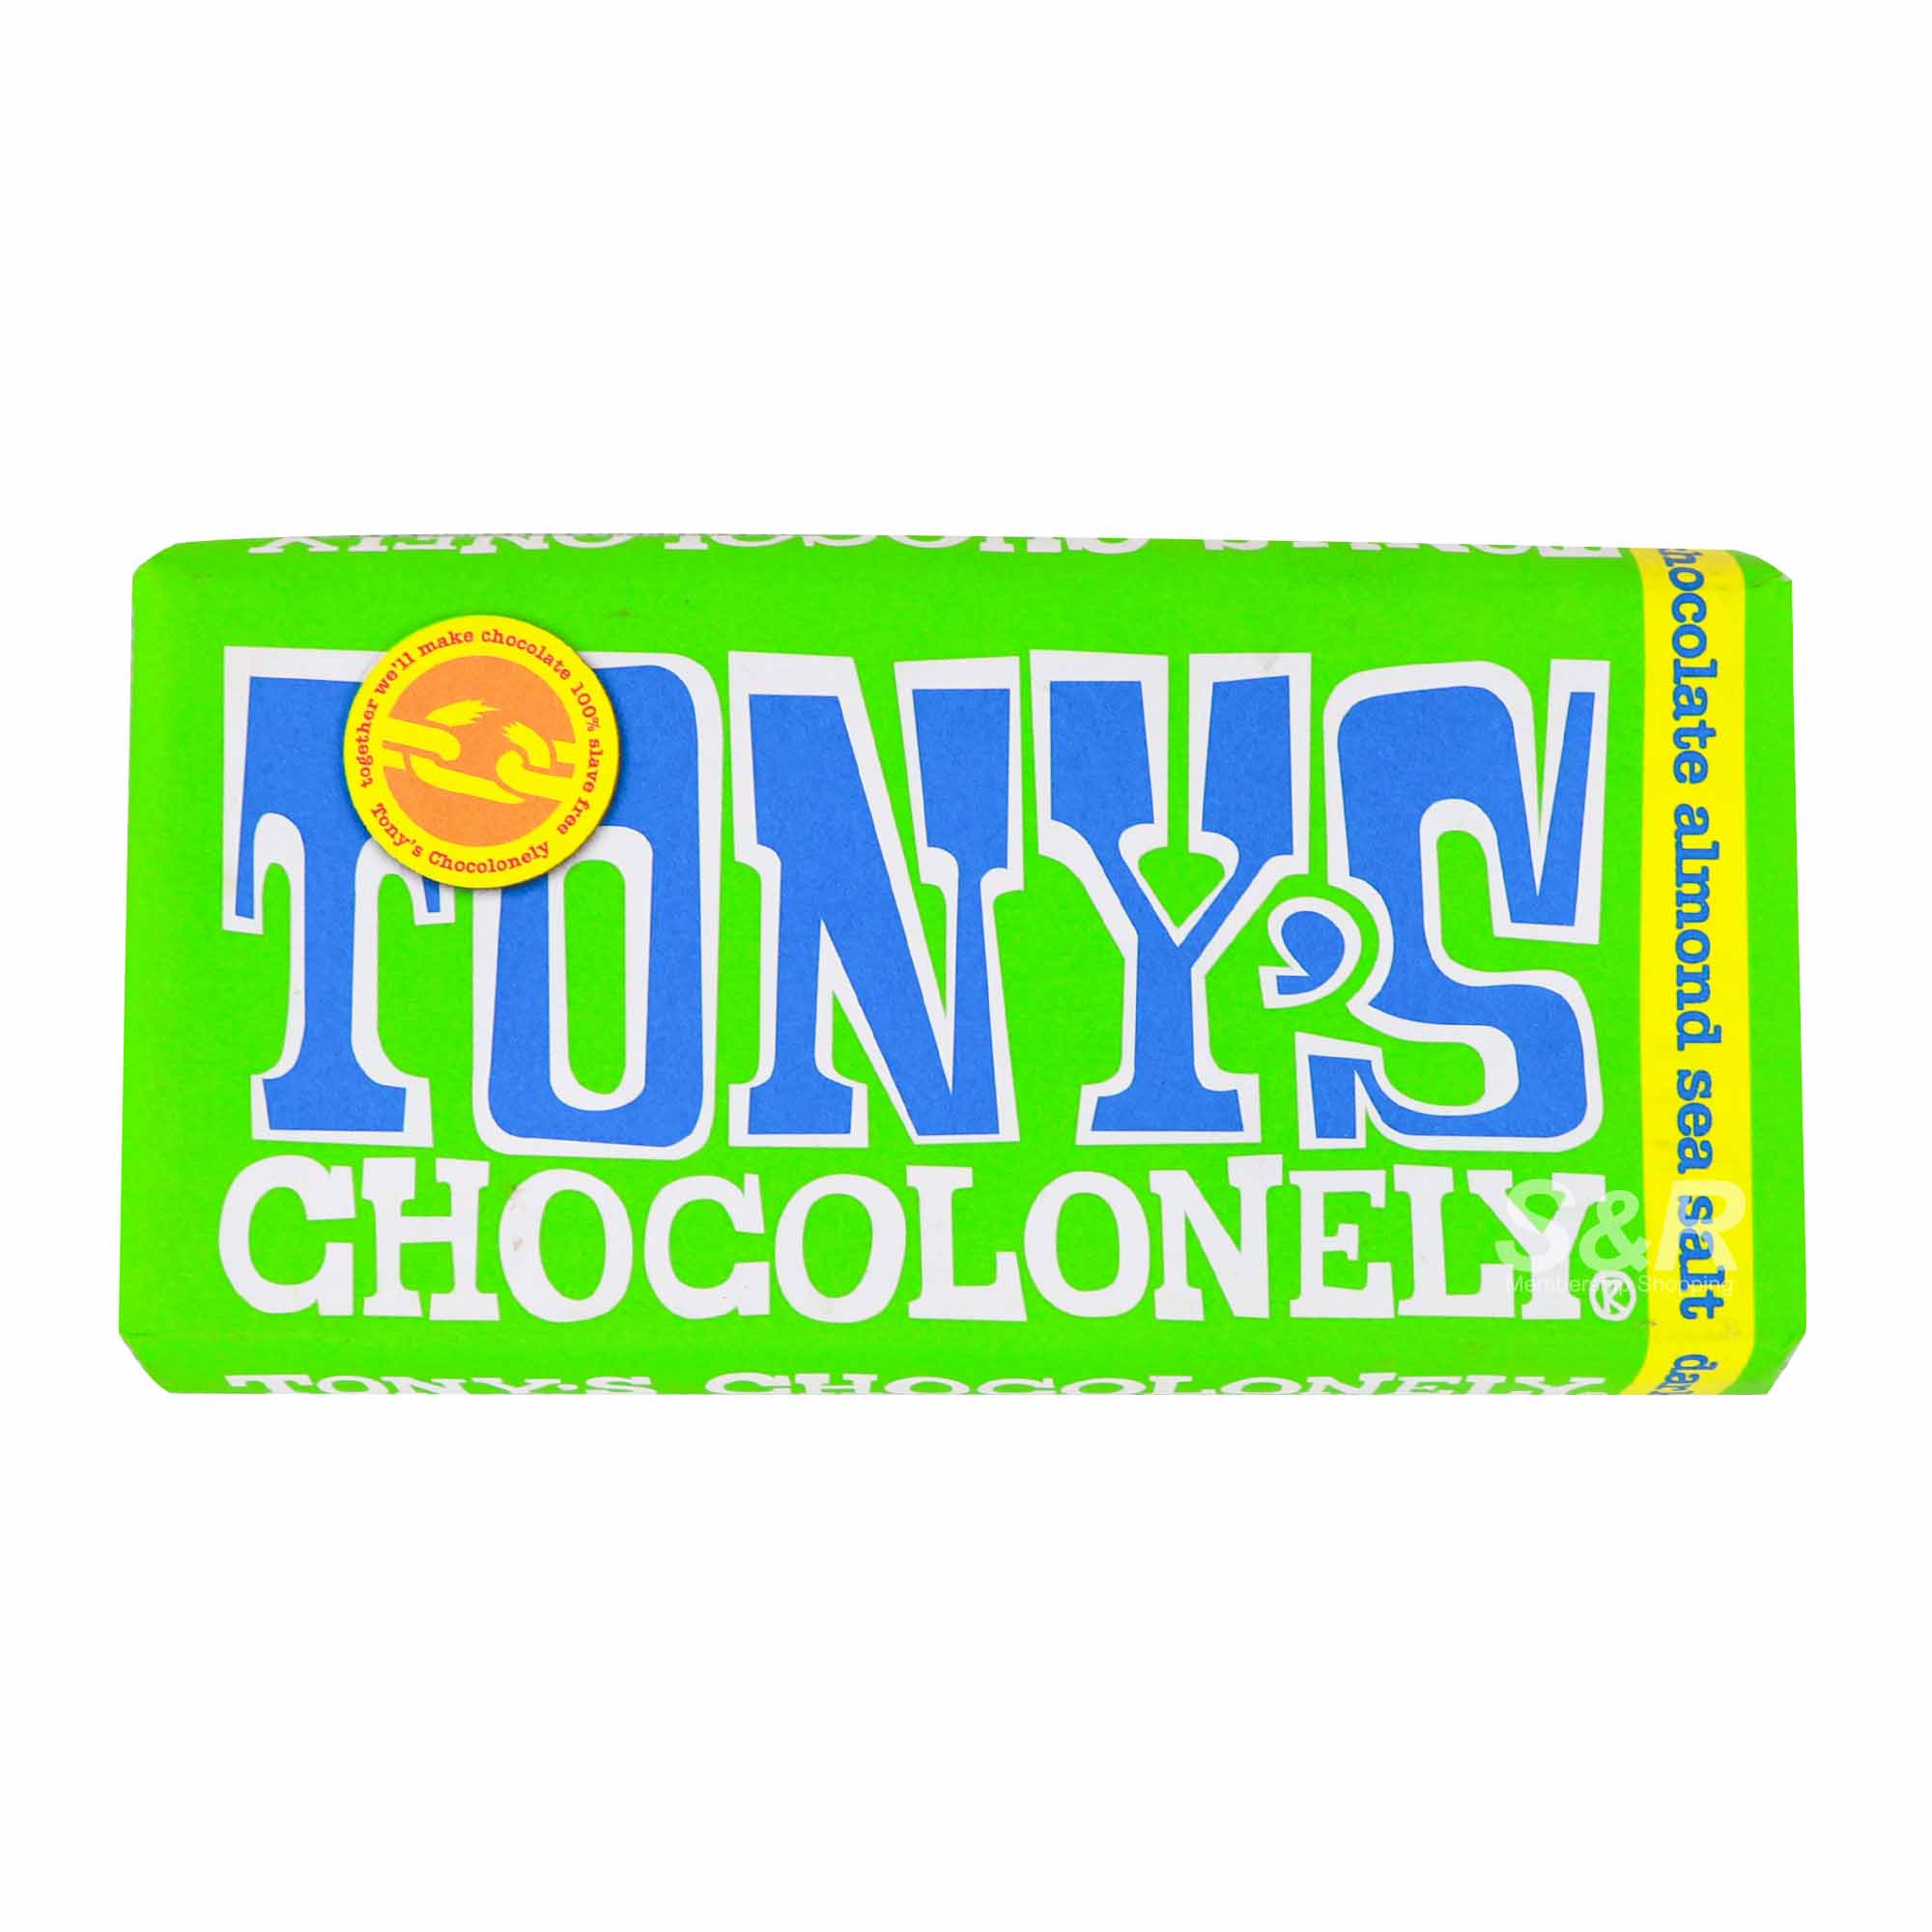 Tony's Chocolonely Chocolate Almond Sea Salt 180g